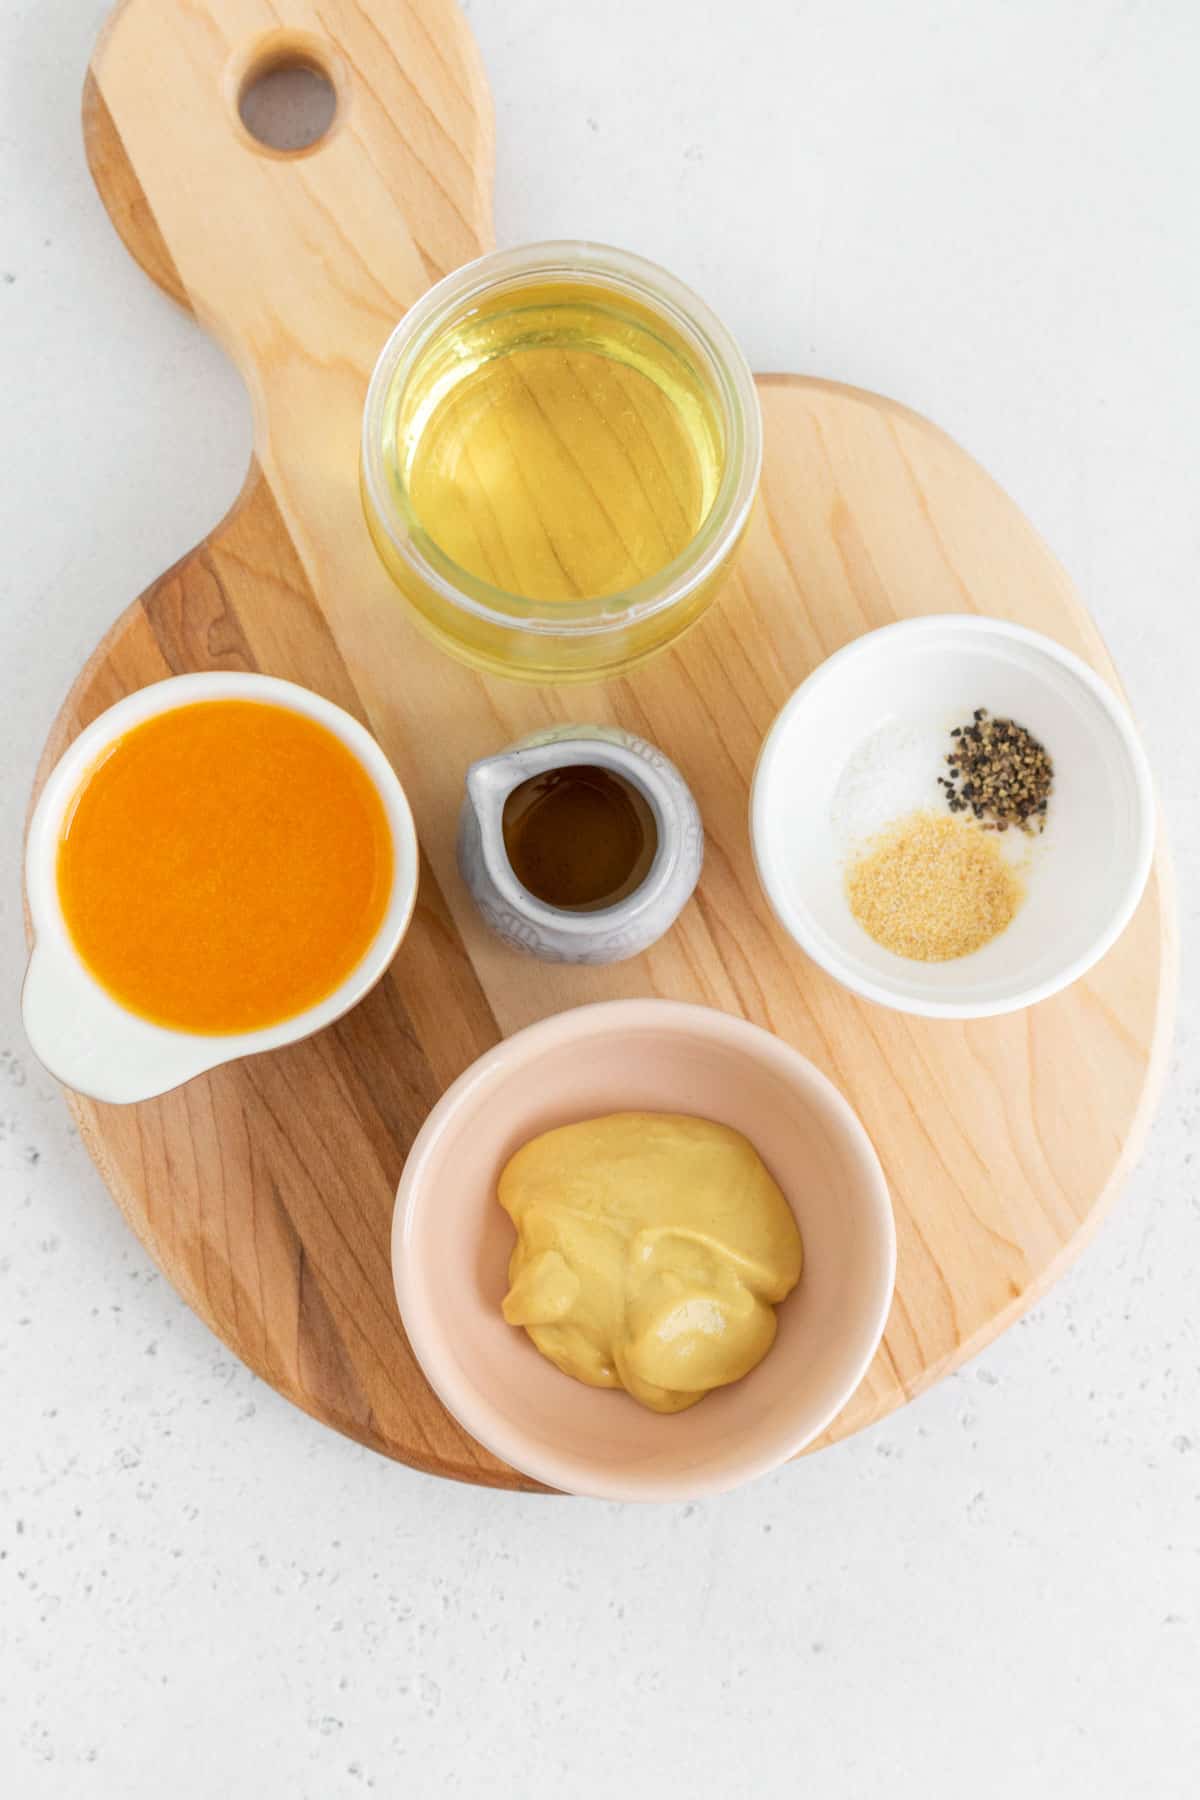 Ingredients needed to make orange mustard dressing.